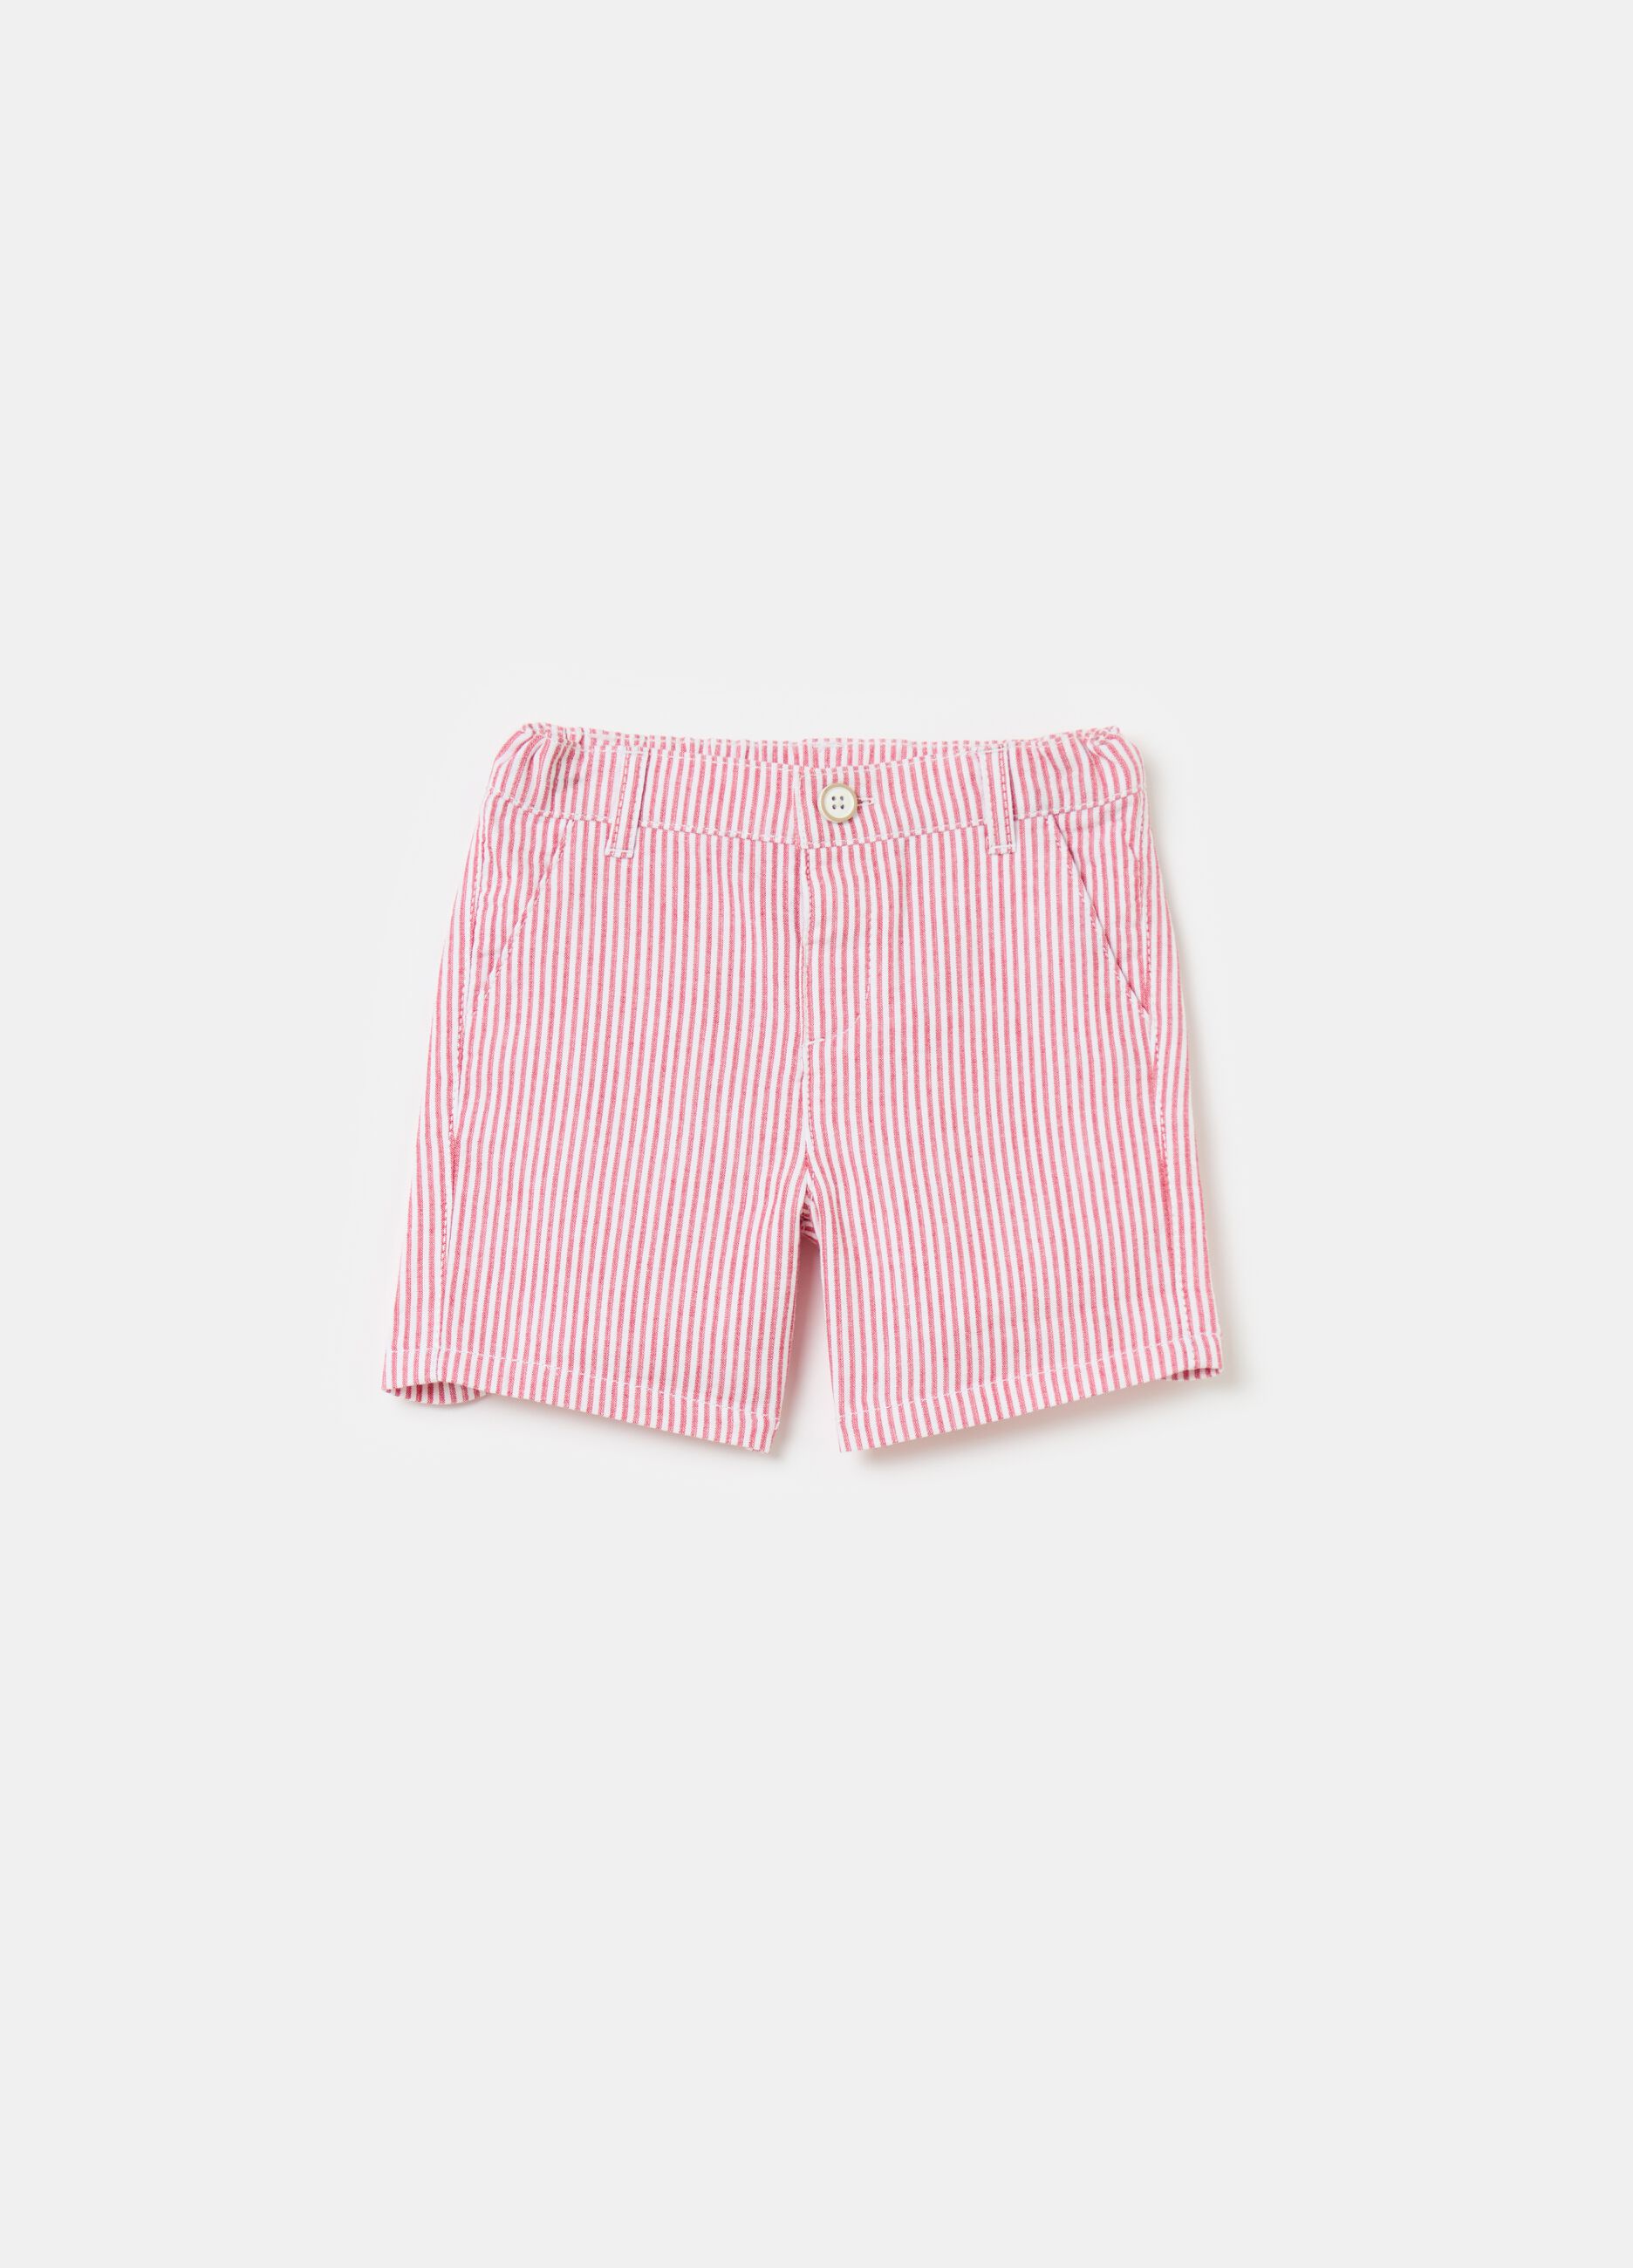 Striped Bermuda shorts in cotton